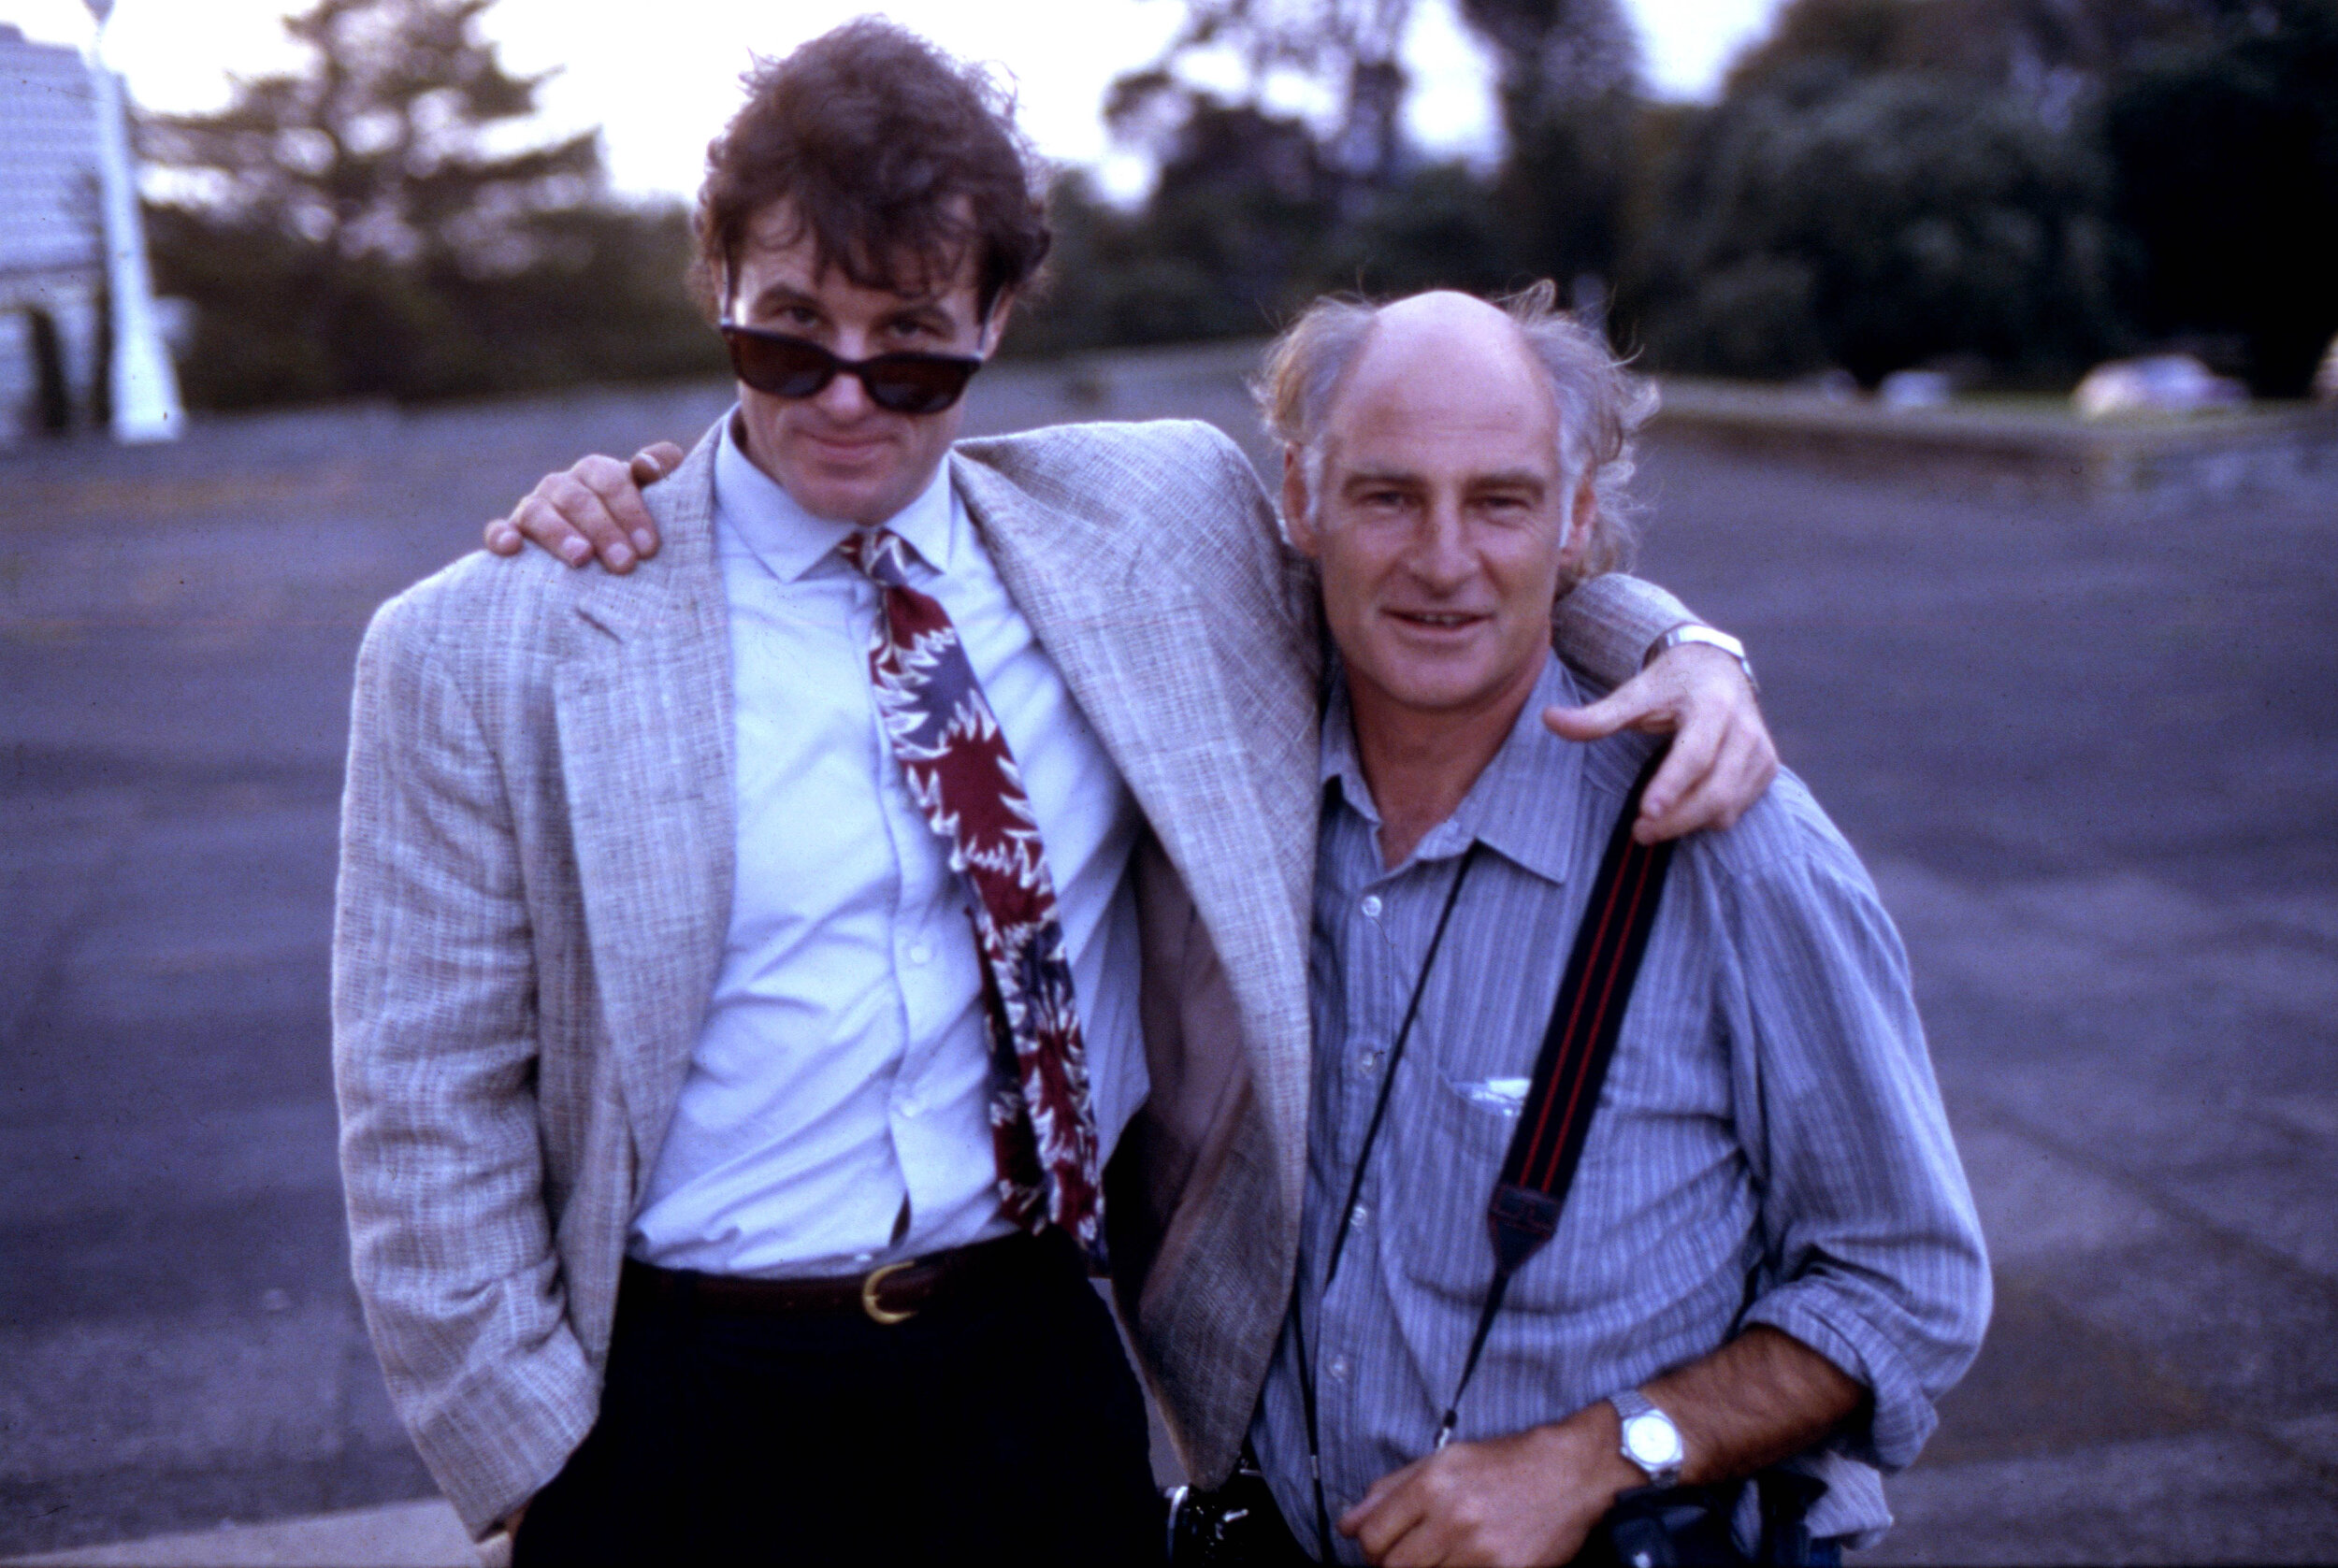 Roger Morton with Brad Davis, the actor.